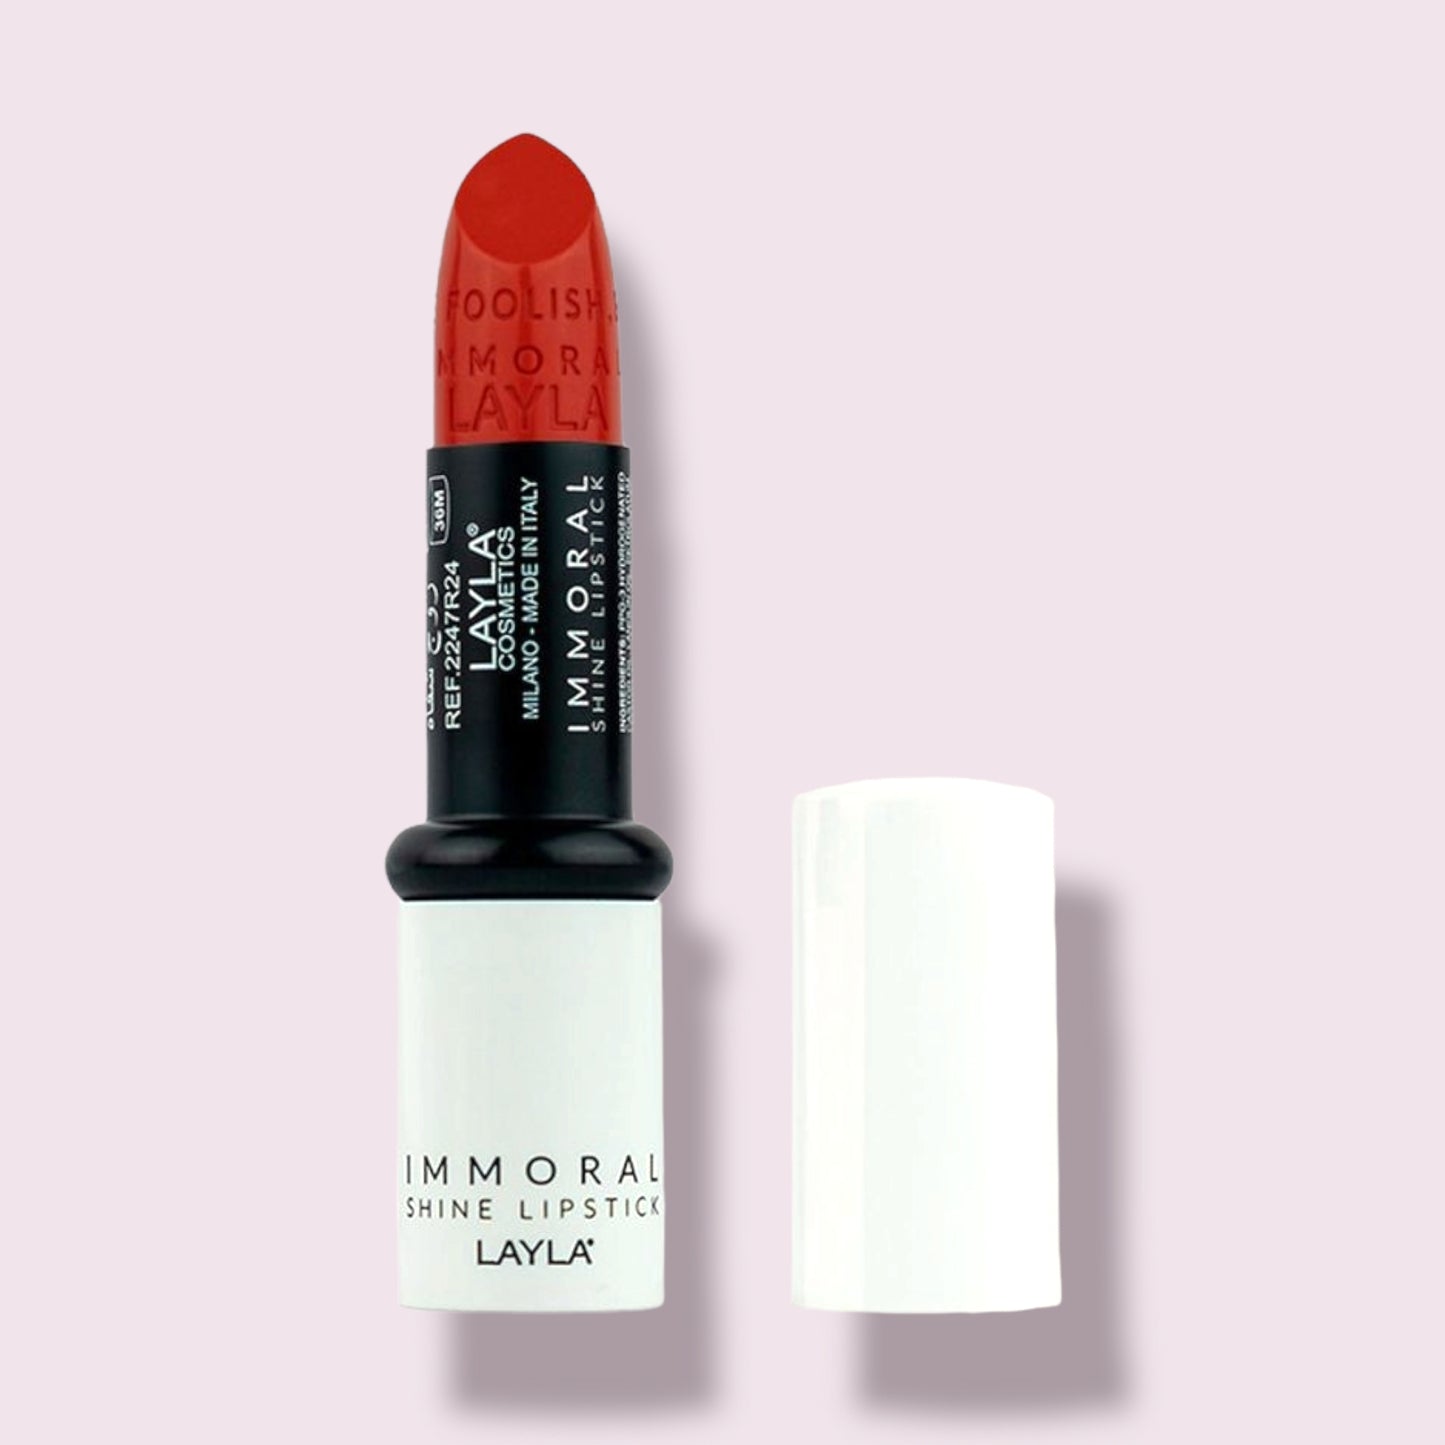 Immoral Shine Lipstick 25